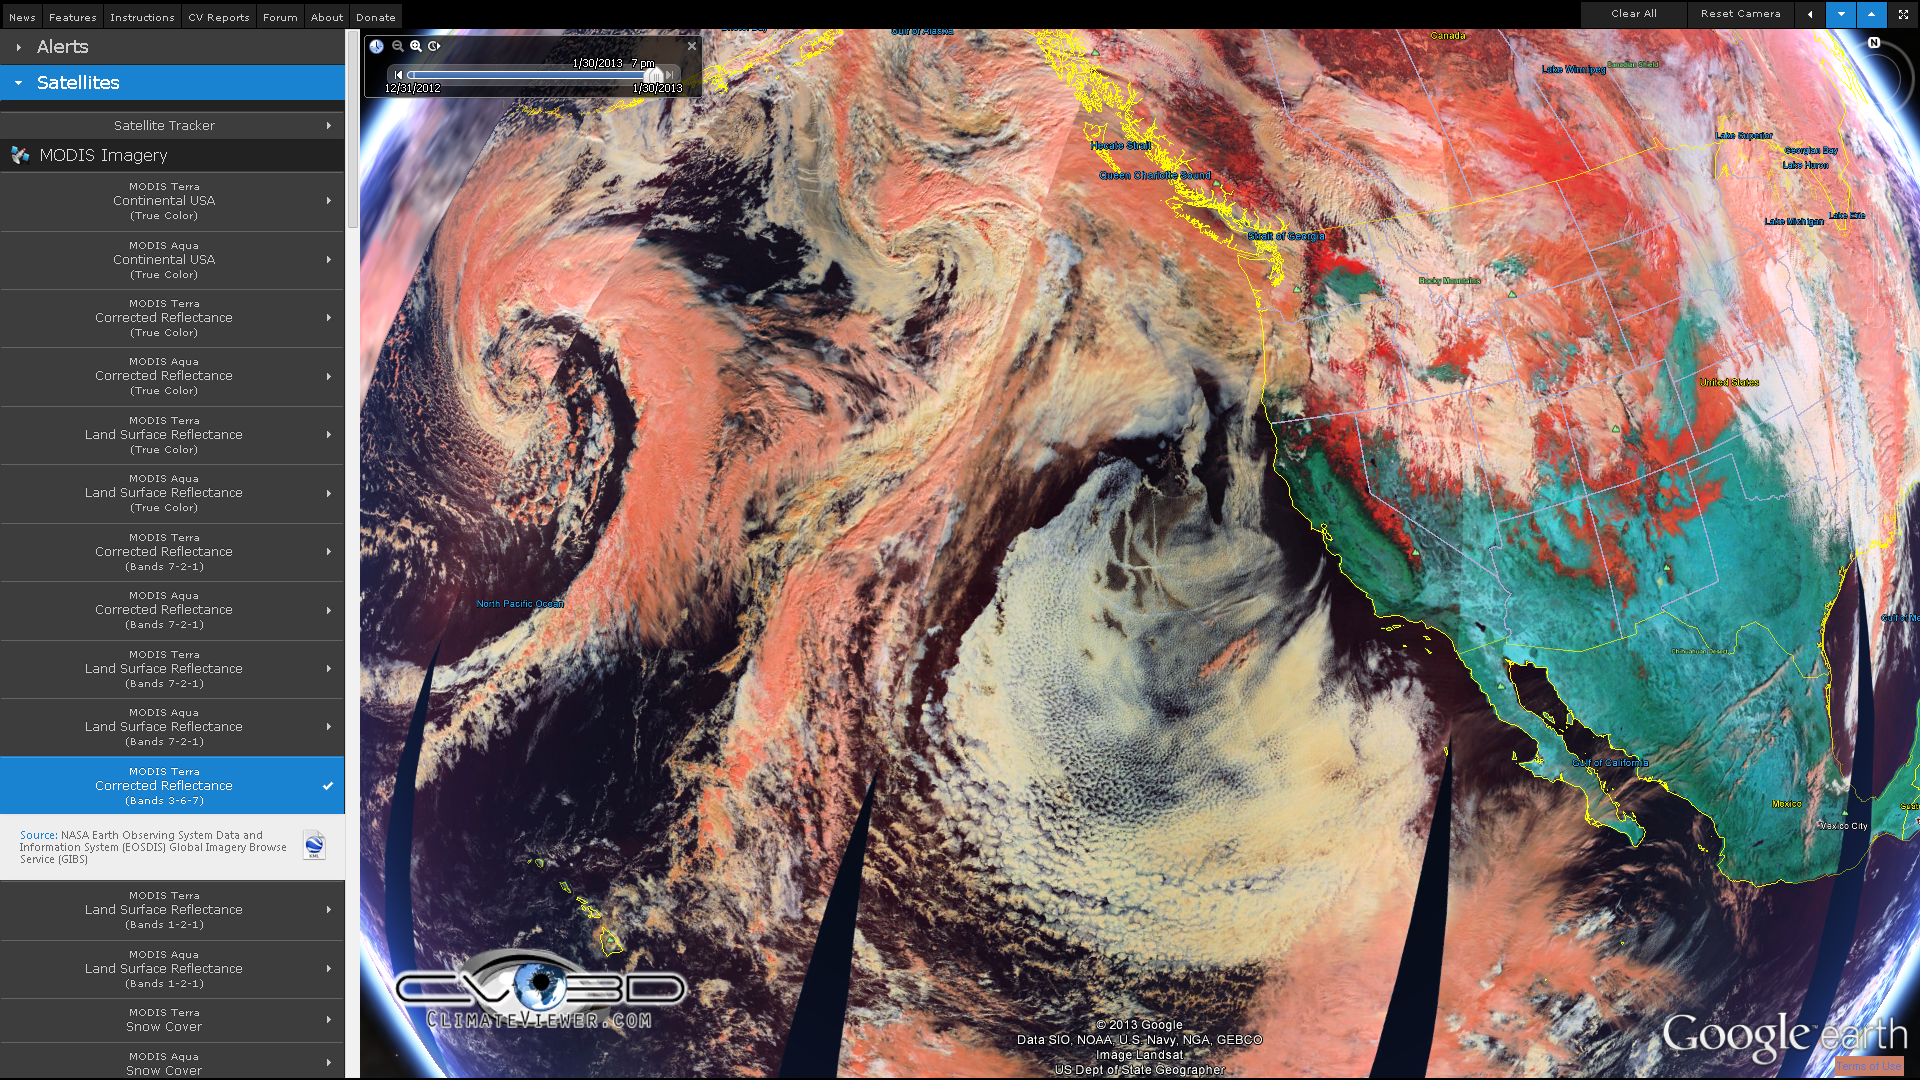 Skipsspor - MODIS Terra Corrected Reflectence Bands (3-6-7) - 30. januar 2014 Climate Viewer 3D climateviewer.com/3D/